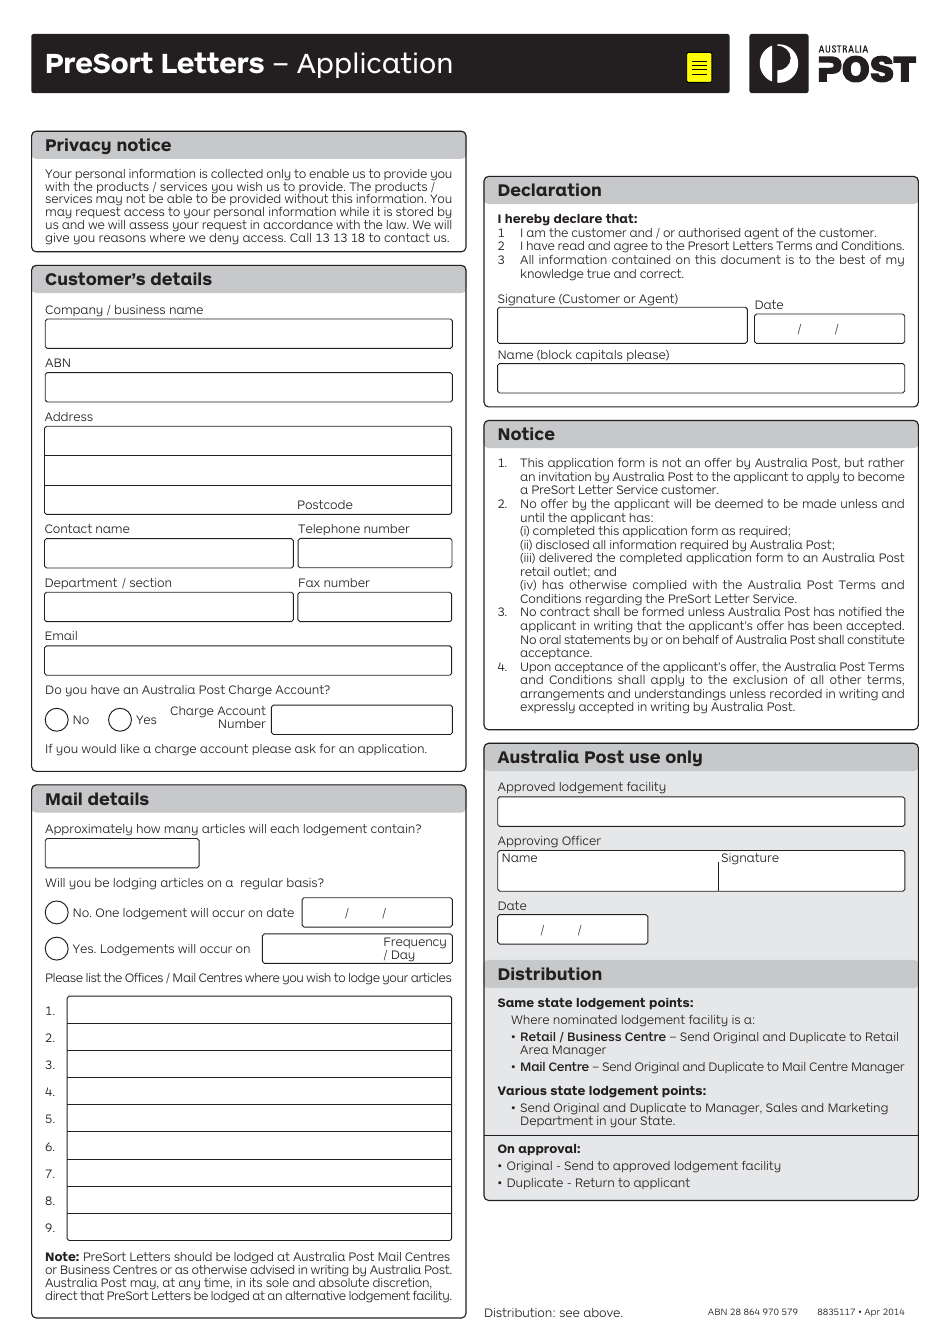 Presort Letters - Application Form - Australia, Page 1